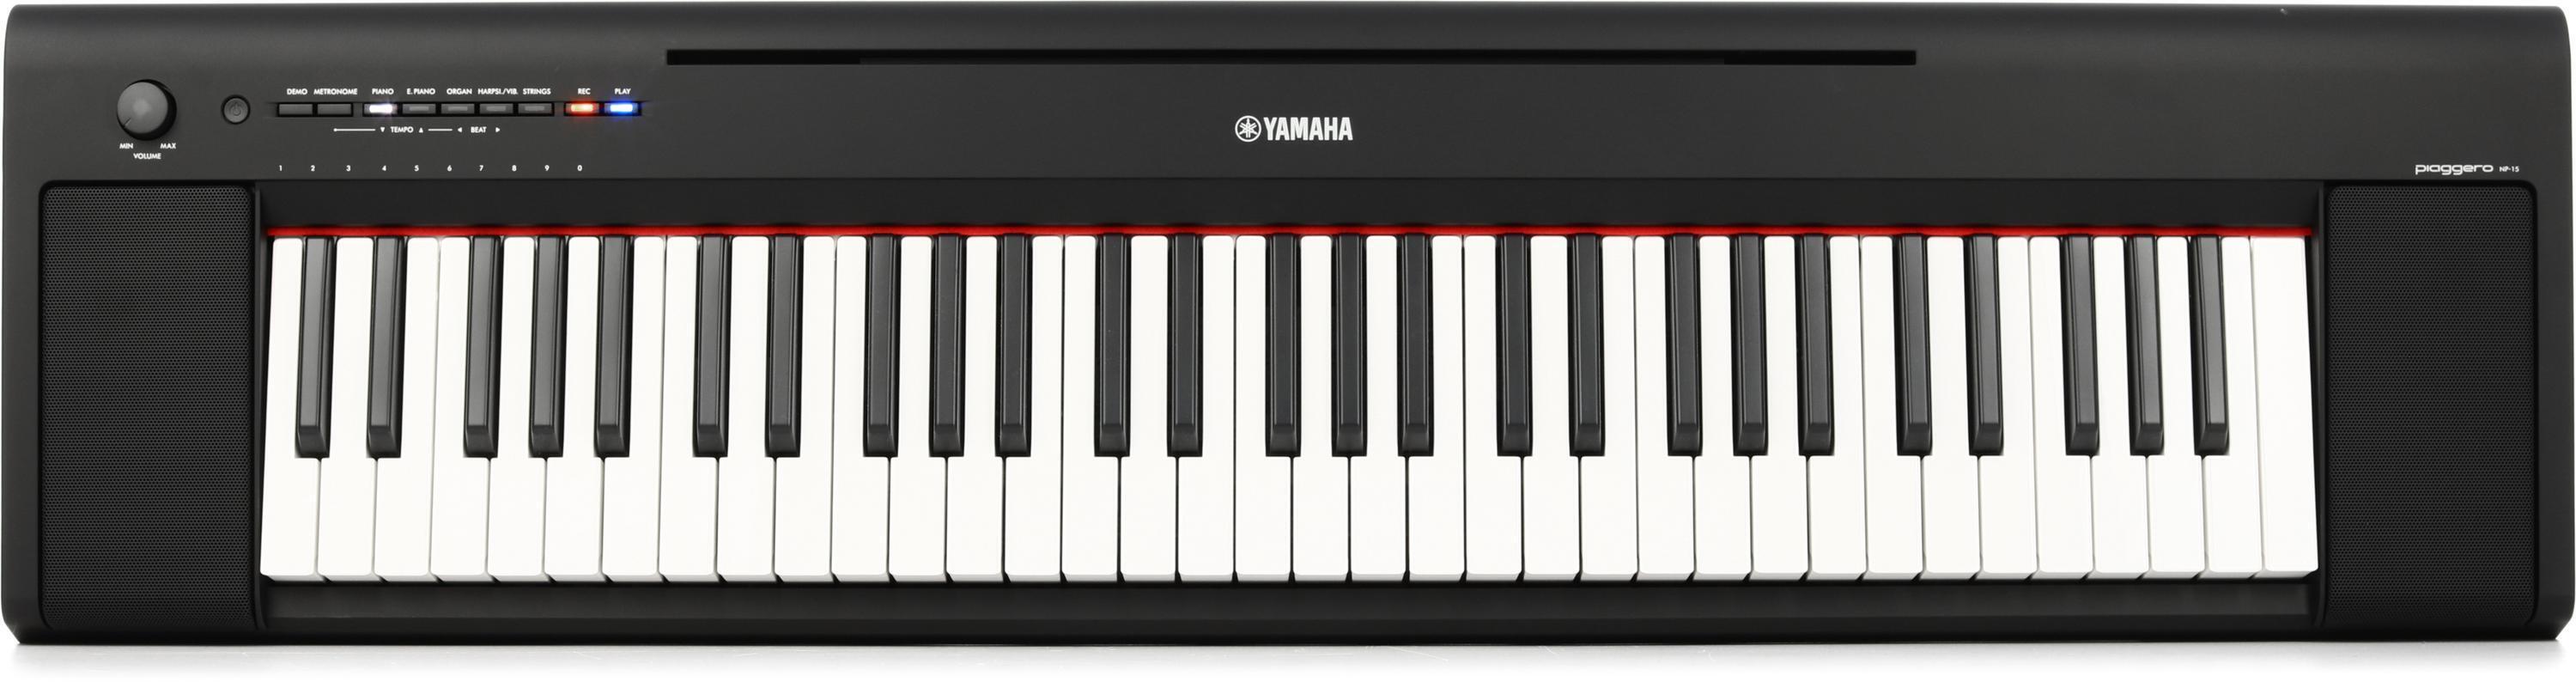 Yamaha Piaggero NP-12 61-key Portable Piano - Black | Sweetwater